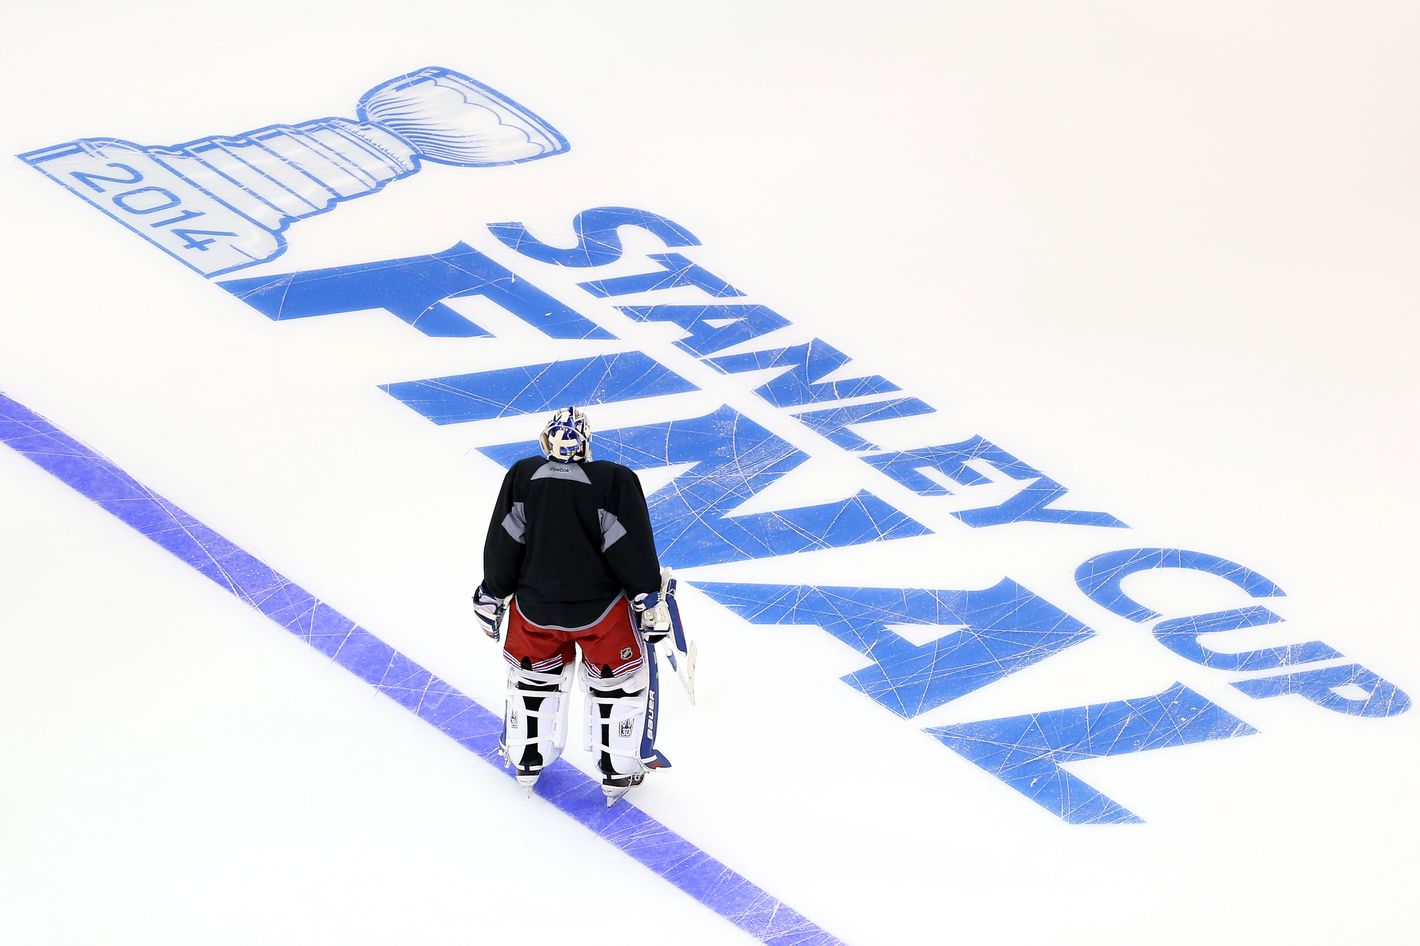 Henrik Lundqvist leads Rangers into Stanley Cup Finals